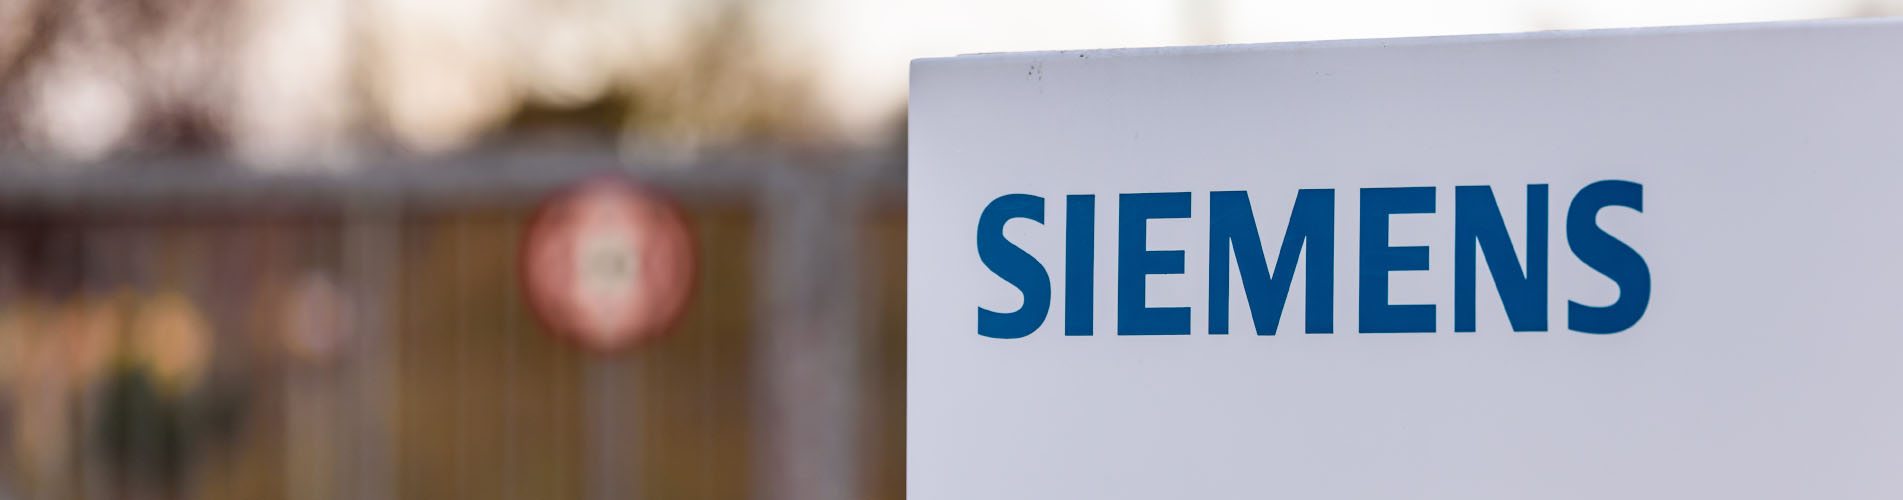 Siemens logo sign post